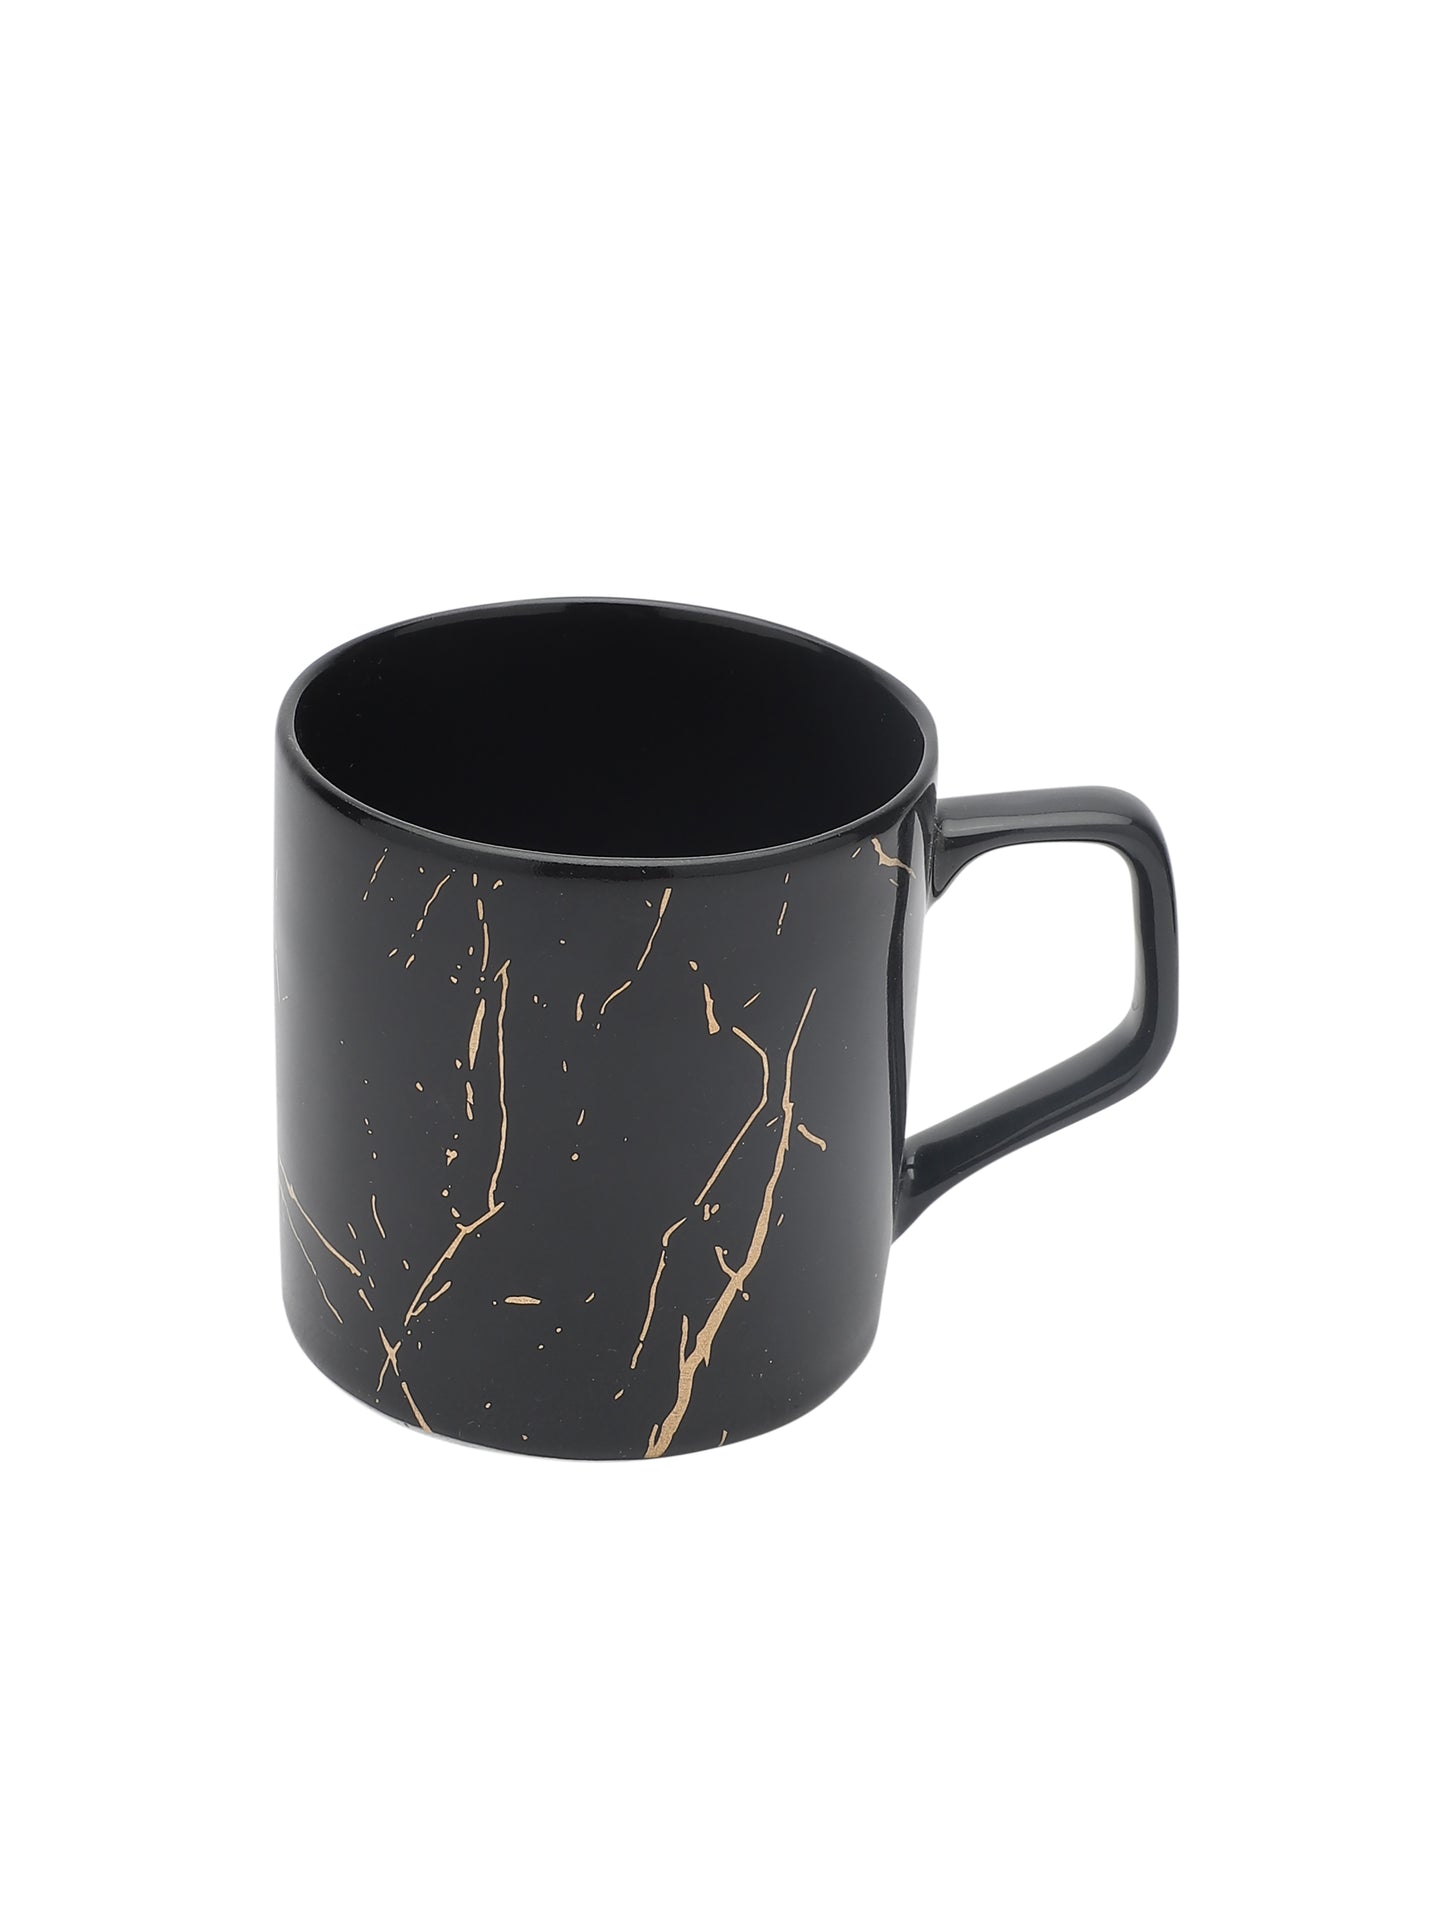 Director Marble Monochrome Black Gold Coffee & Tea Mugs, 220ml, Set of 6